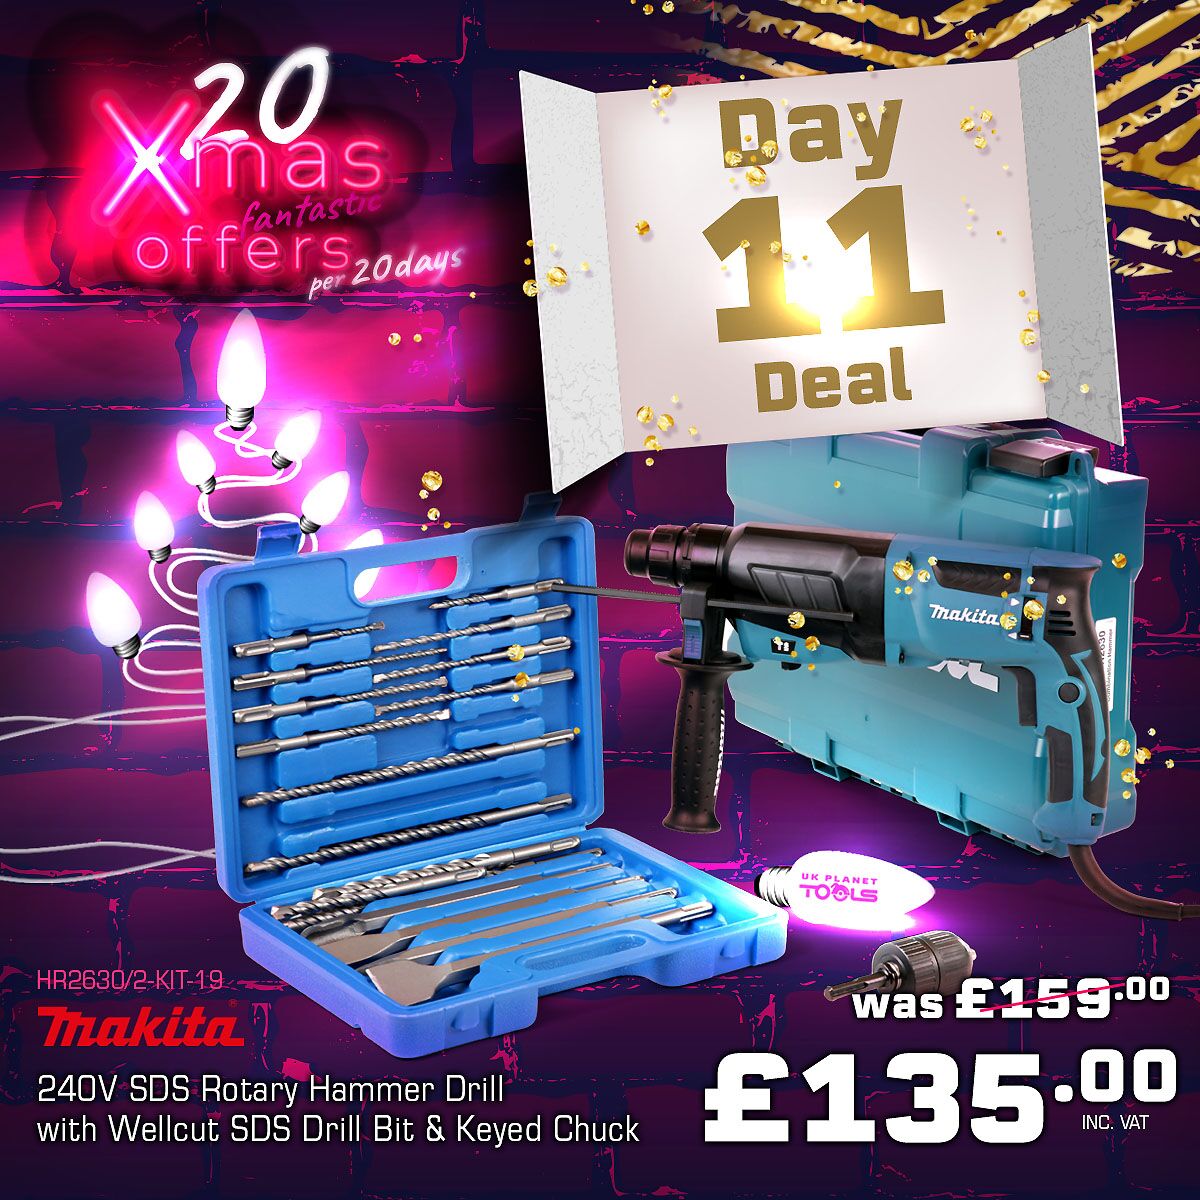 🎄🎄🎄 XMAS COUNTDOWN DEALS 🎄🎄🎄

DAY 11🔥

🔹Makita HR2630 SDS+ 3 Mode Rotary Hammer Drill 240V With 17 Piece Acce. & Keyless Chuck - bit.ly/2GcJNpz

#ukplanettools #tools #deals #uk #sale #xmas #powertools #tools #makita